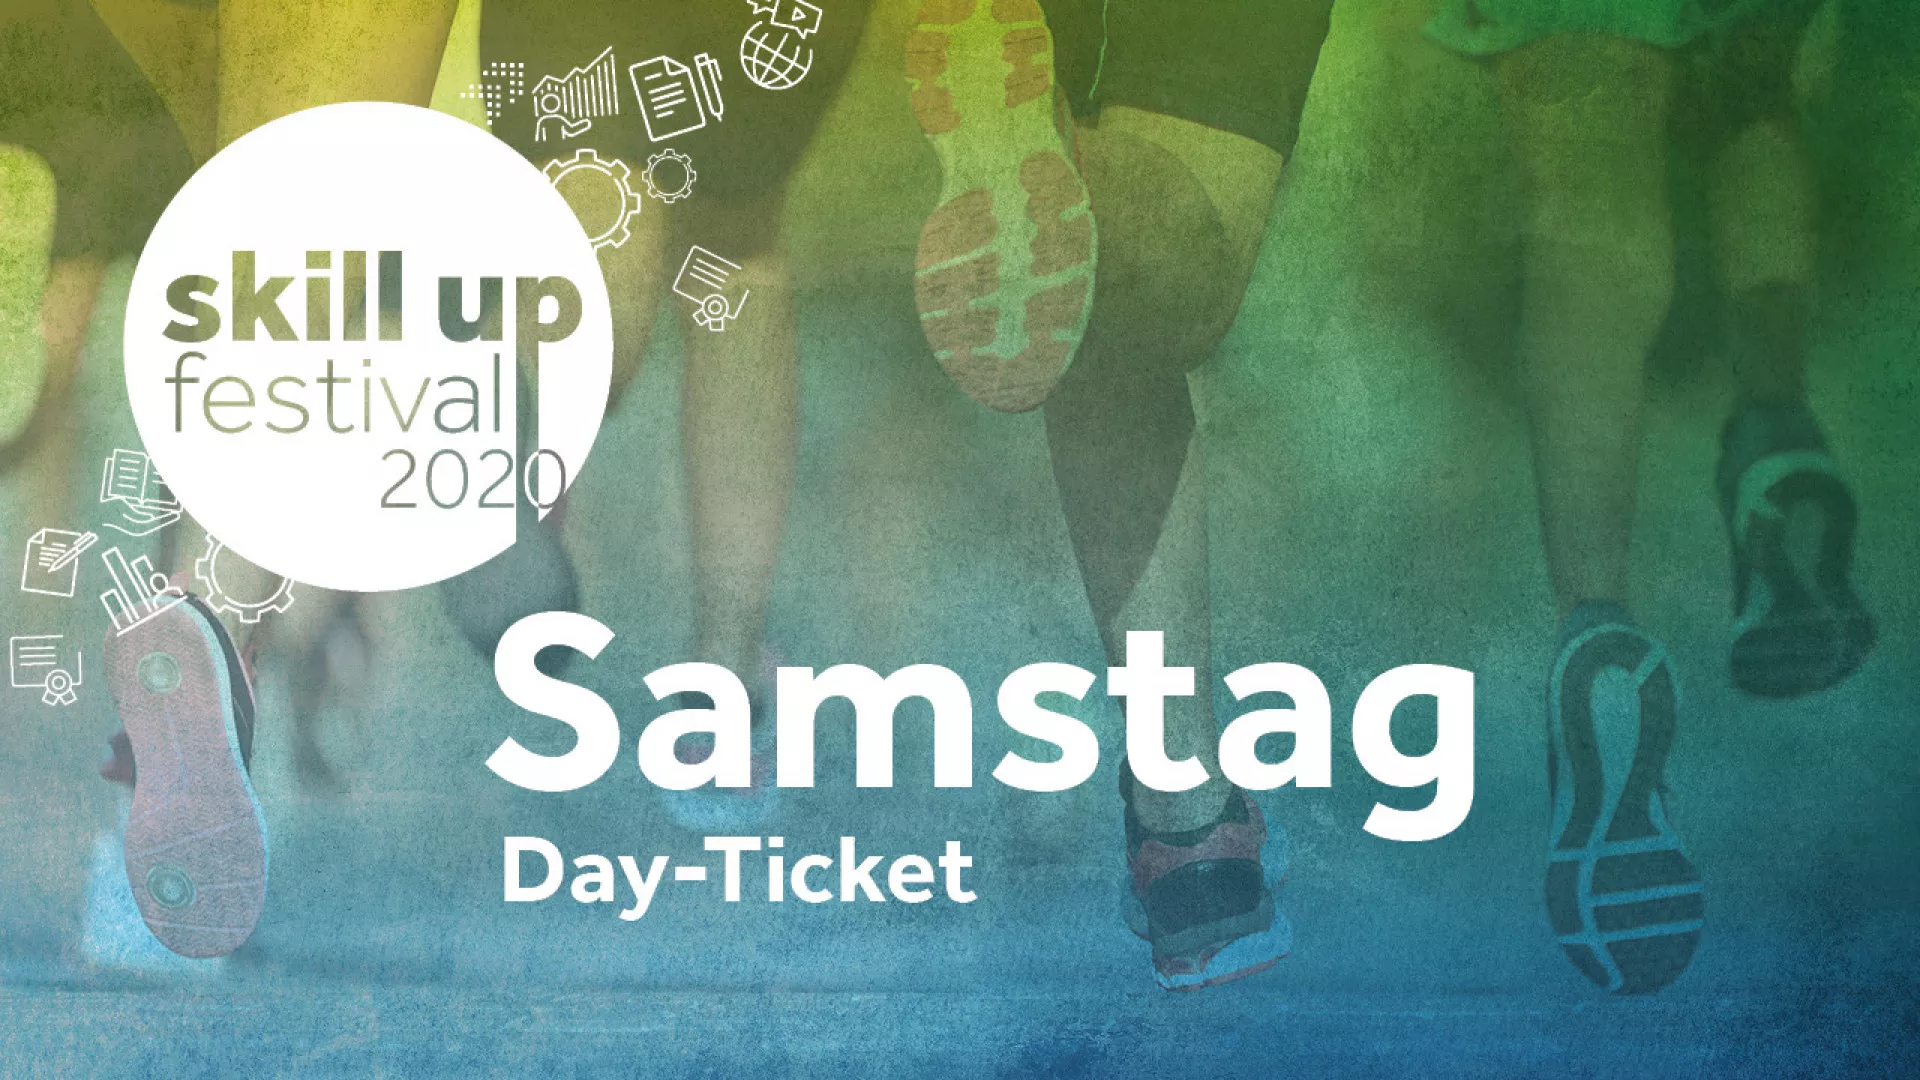 Skill Up Festival Day-Ticket Samstag, 31.10.2020, Bild, image, skilltrainer, kv business school zürich, foto